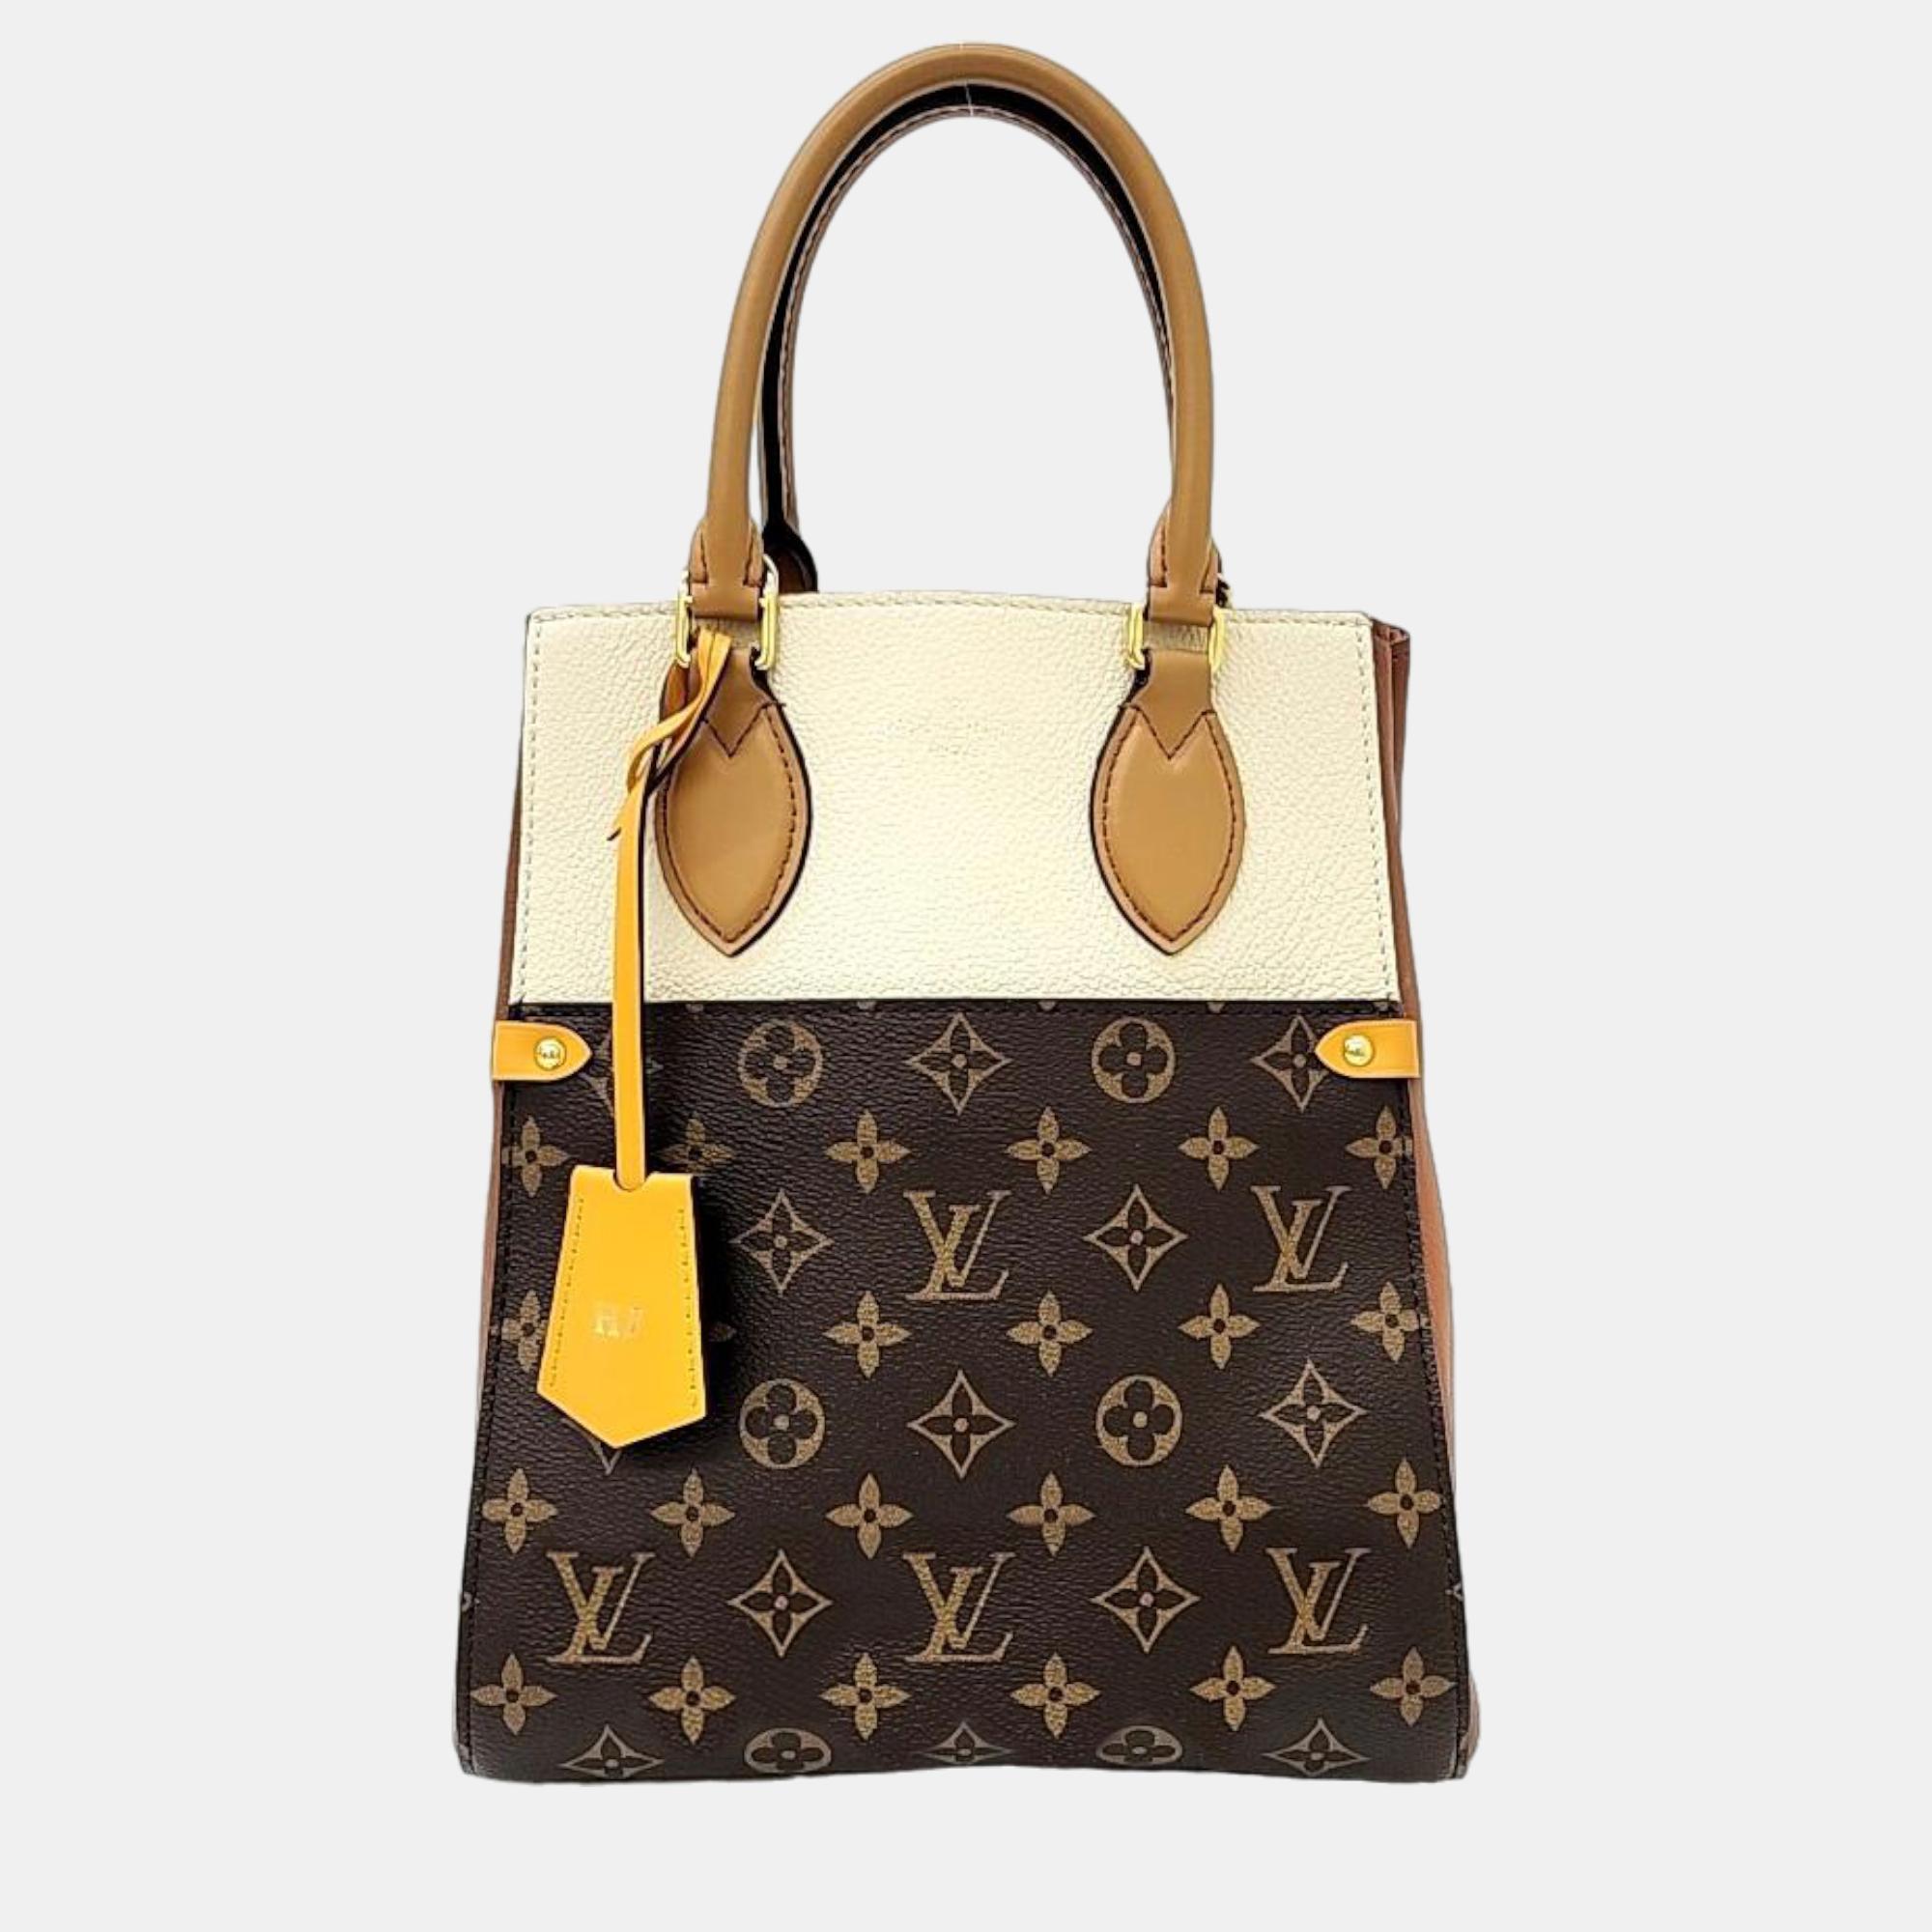 Pre-Owned Louis Vuitton Items- Second Hand Louis Vuitton Bags, Handbags,  Purses & more